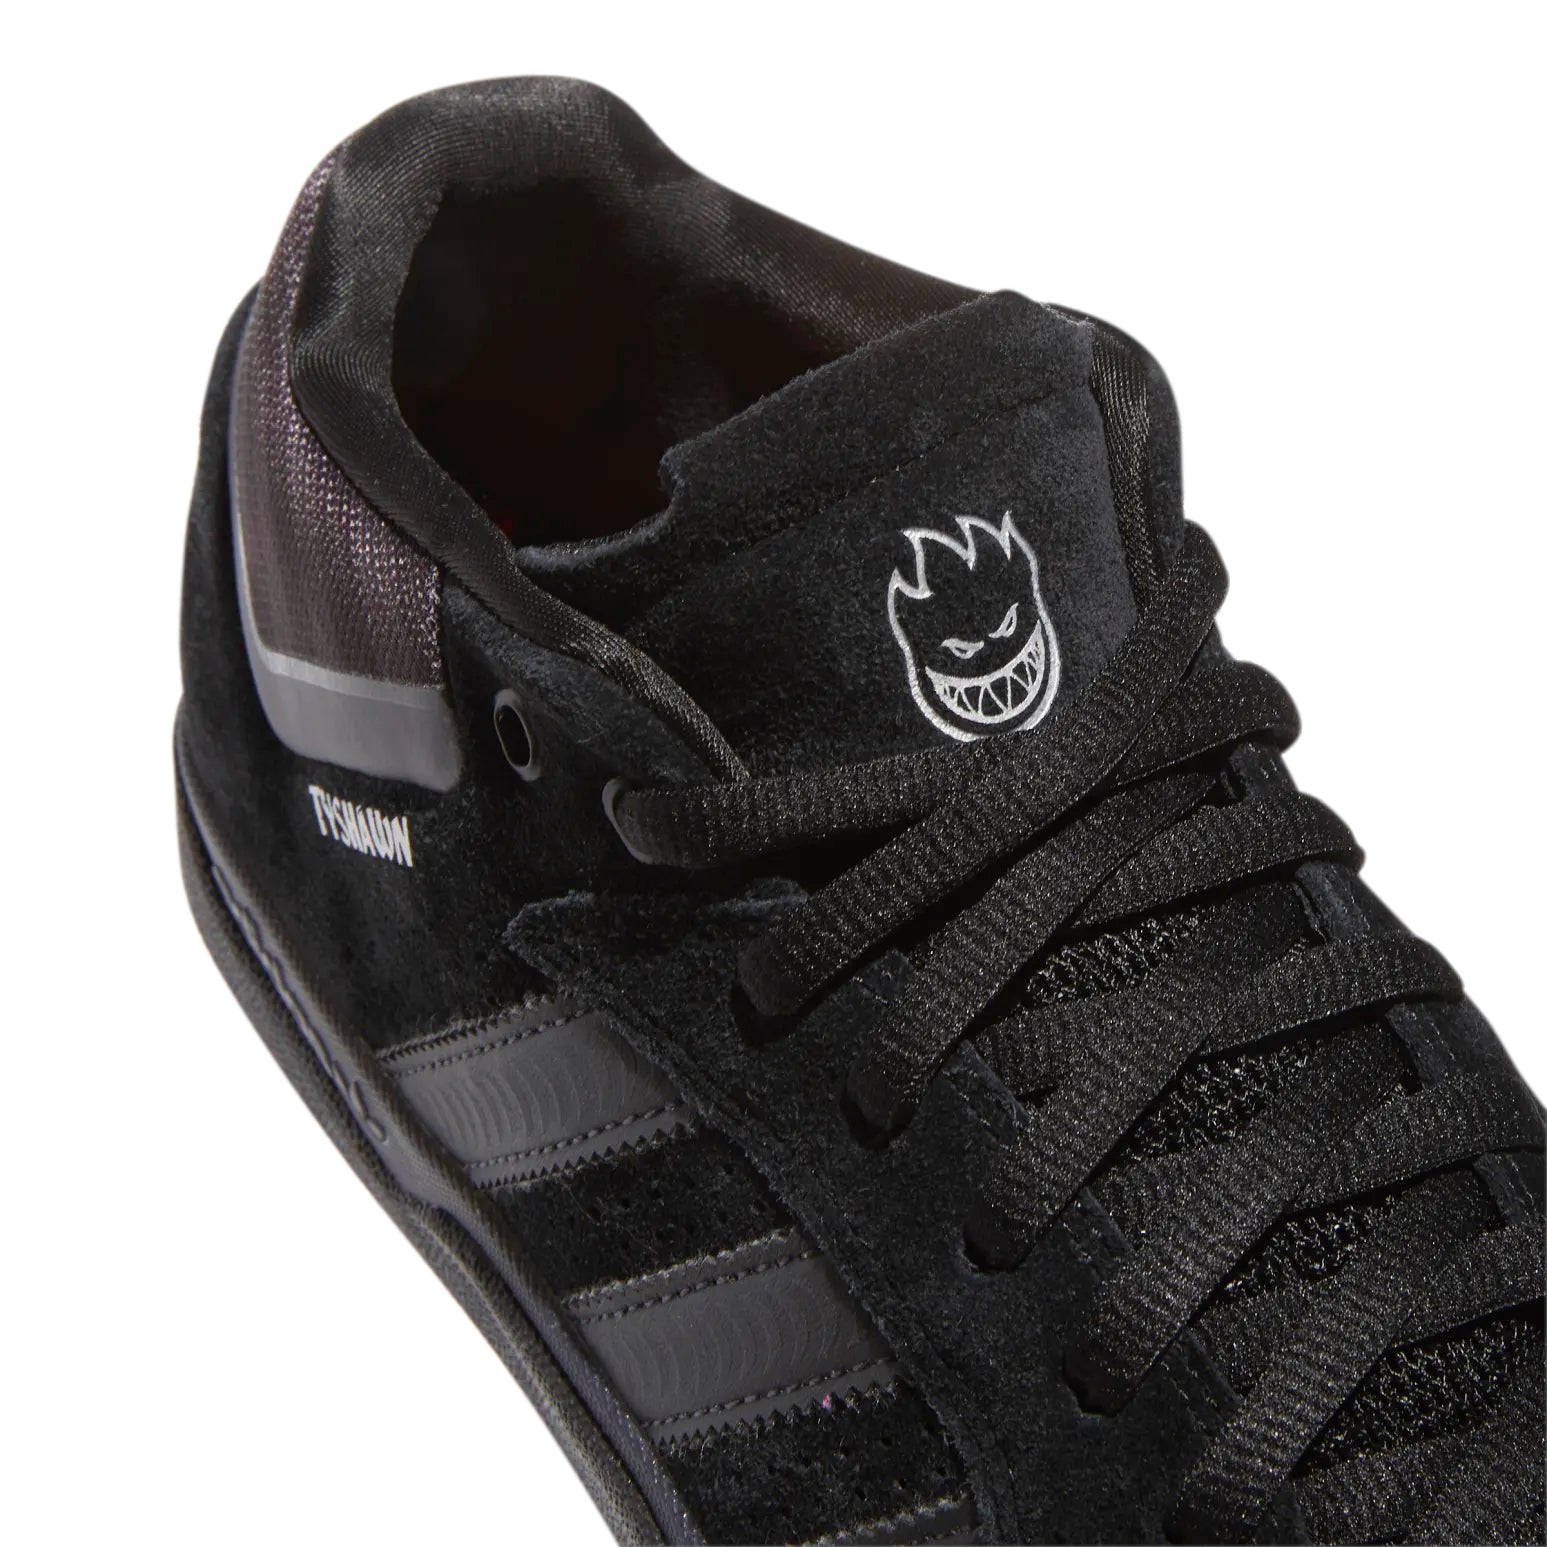 Core Black Spitfire x Tyshawn Adidas Skateboarding Shoe Detail